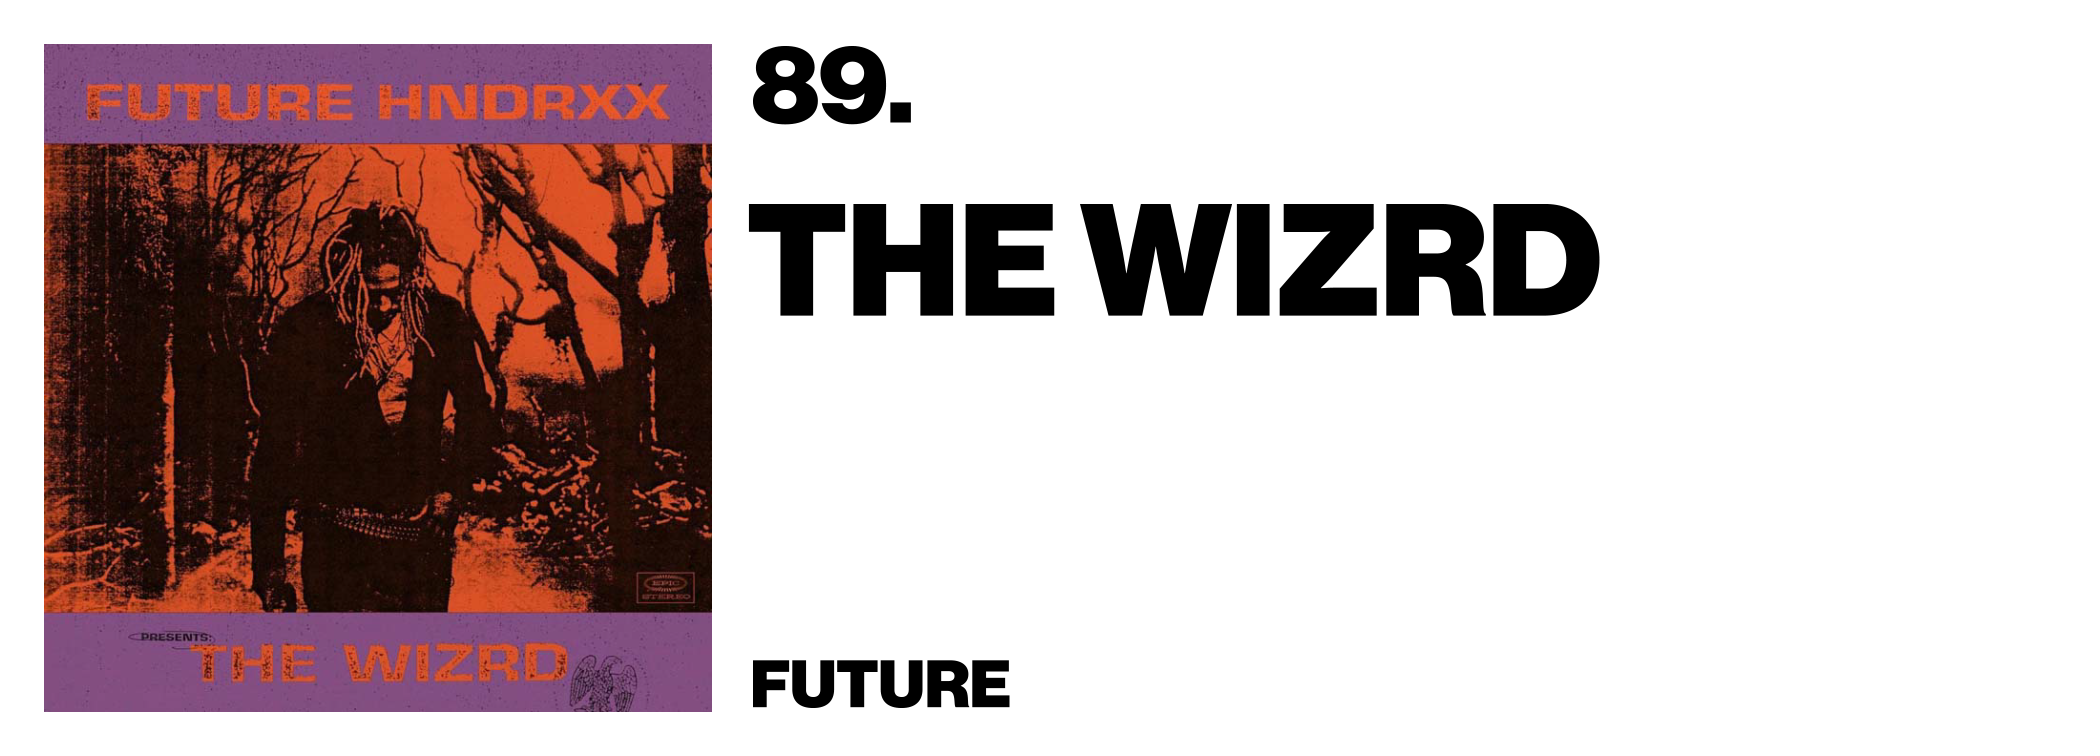 future the wizrd alt cover